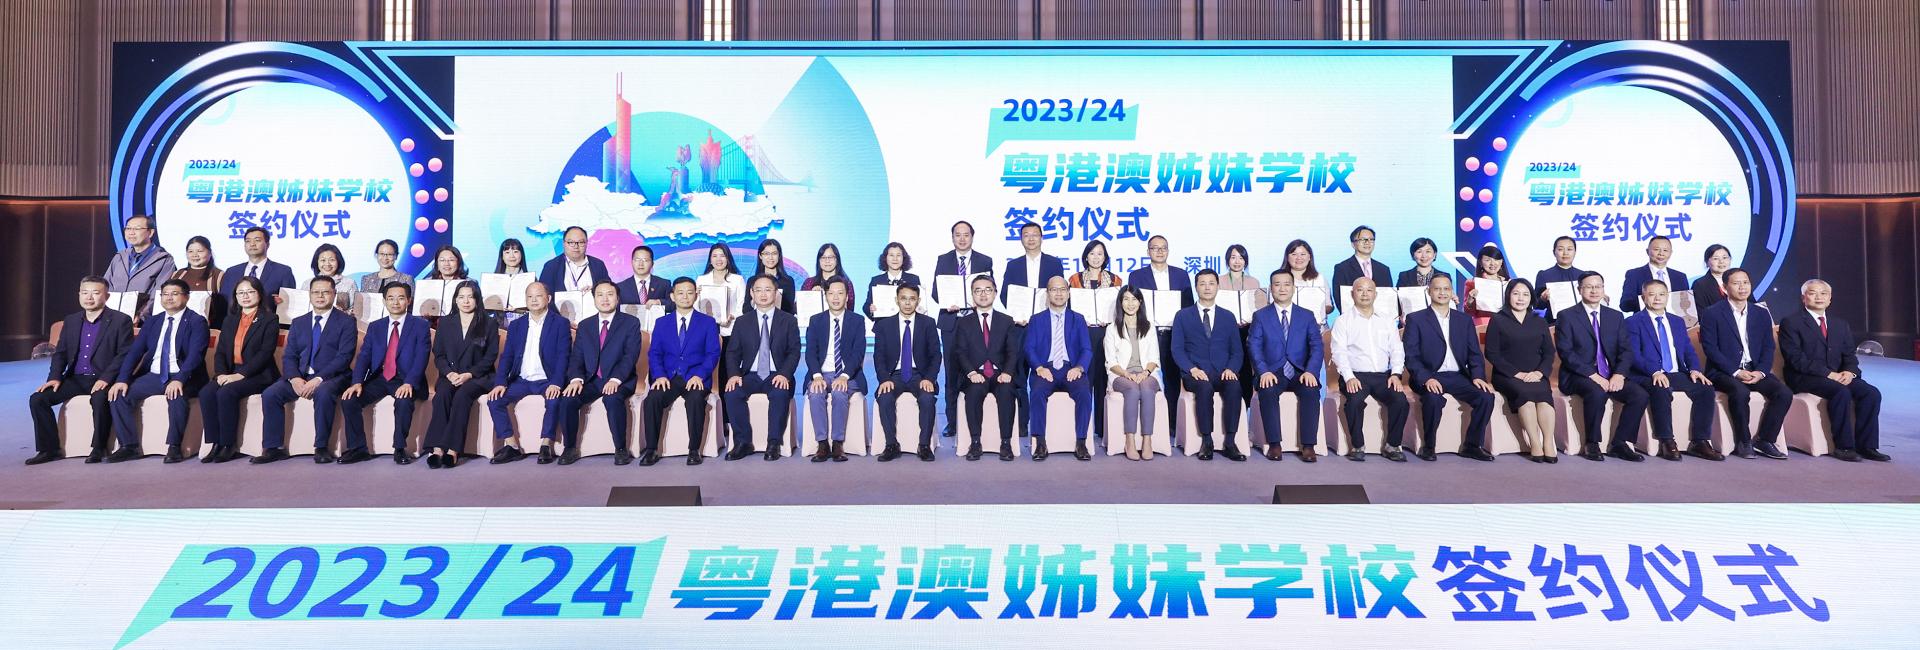 Guangdong-Hong Kong Sister School Contract Signing Ceremony